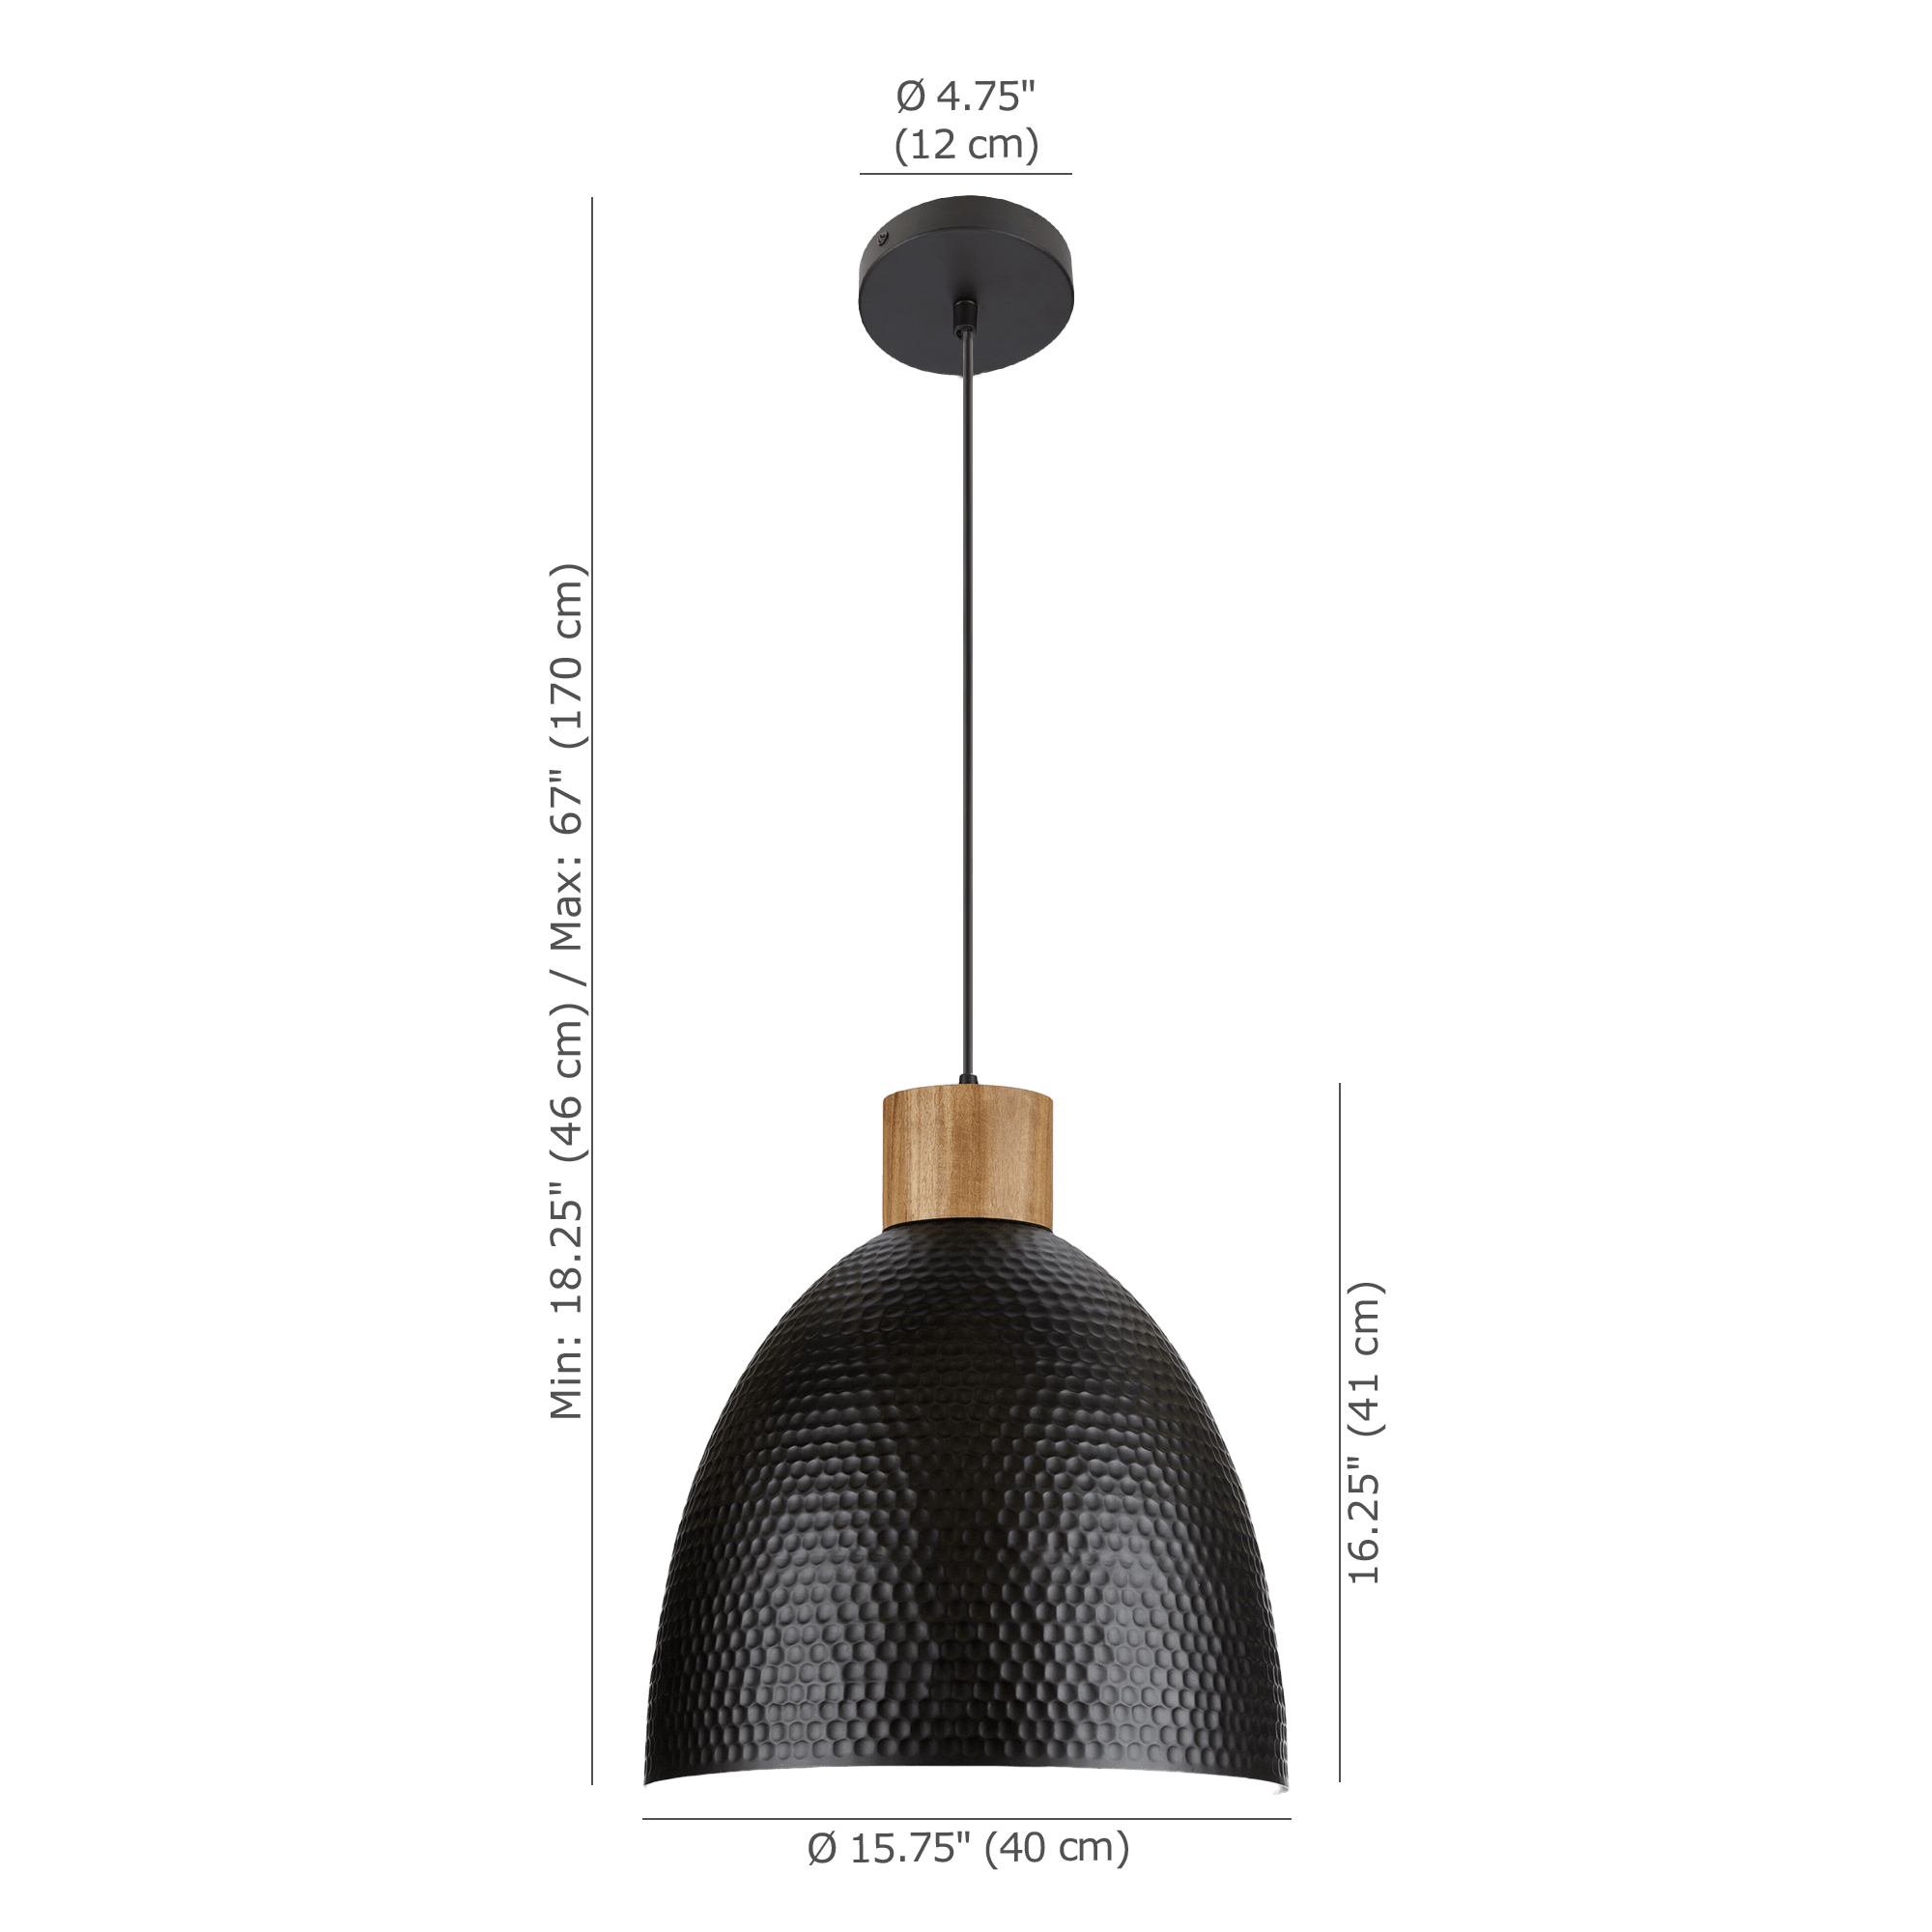 Mercer41 Lampe chauffe-bougie réglable Minimalisme Luminosité - Wayfair  Canada